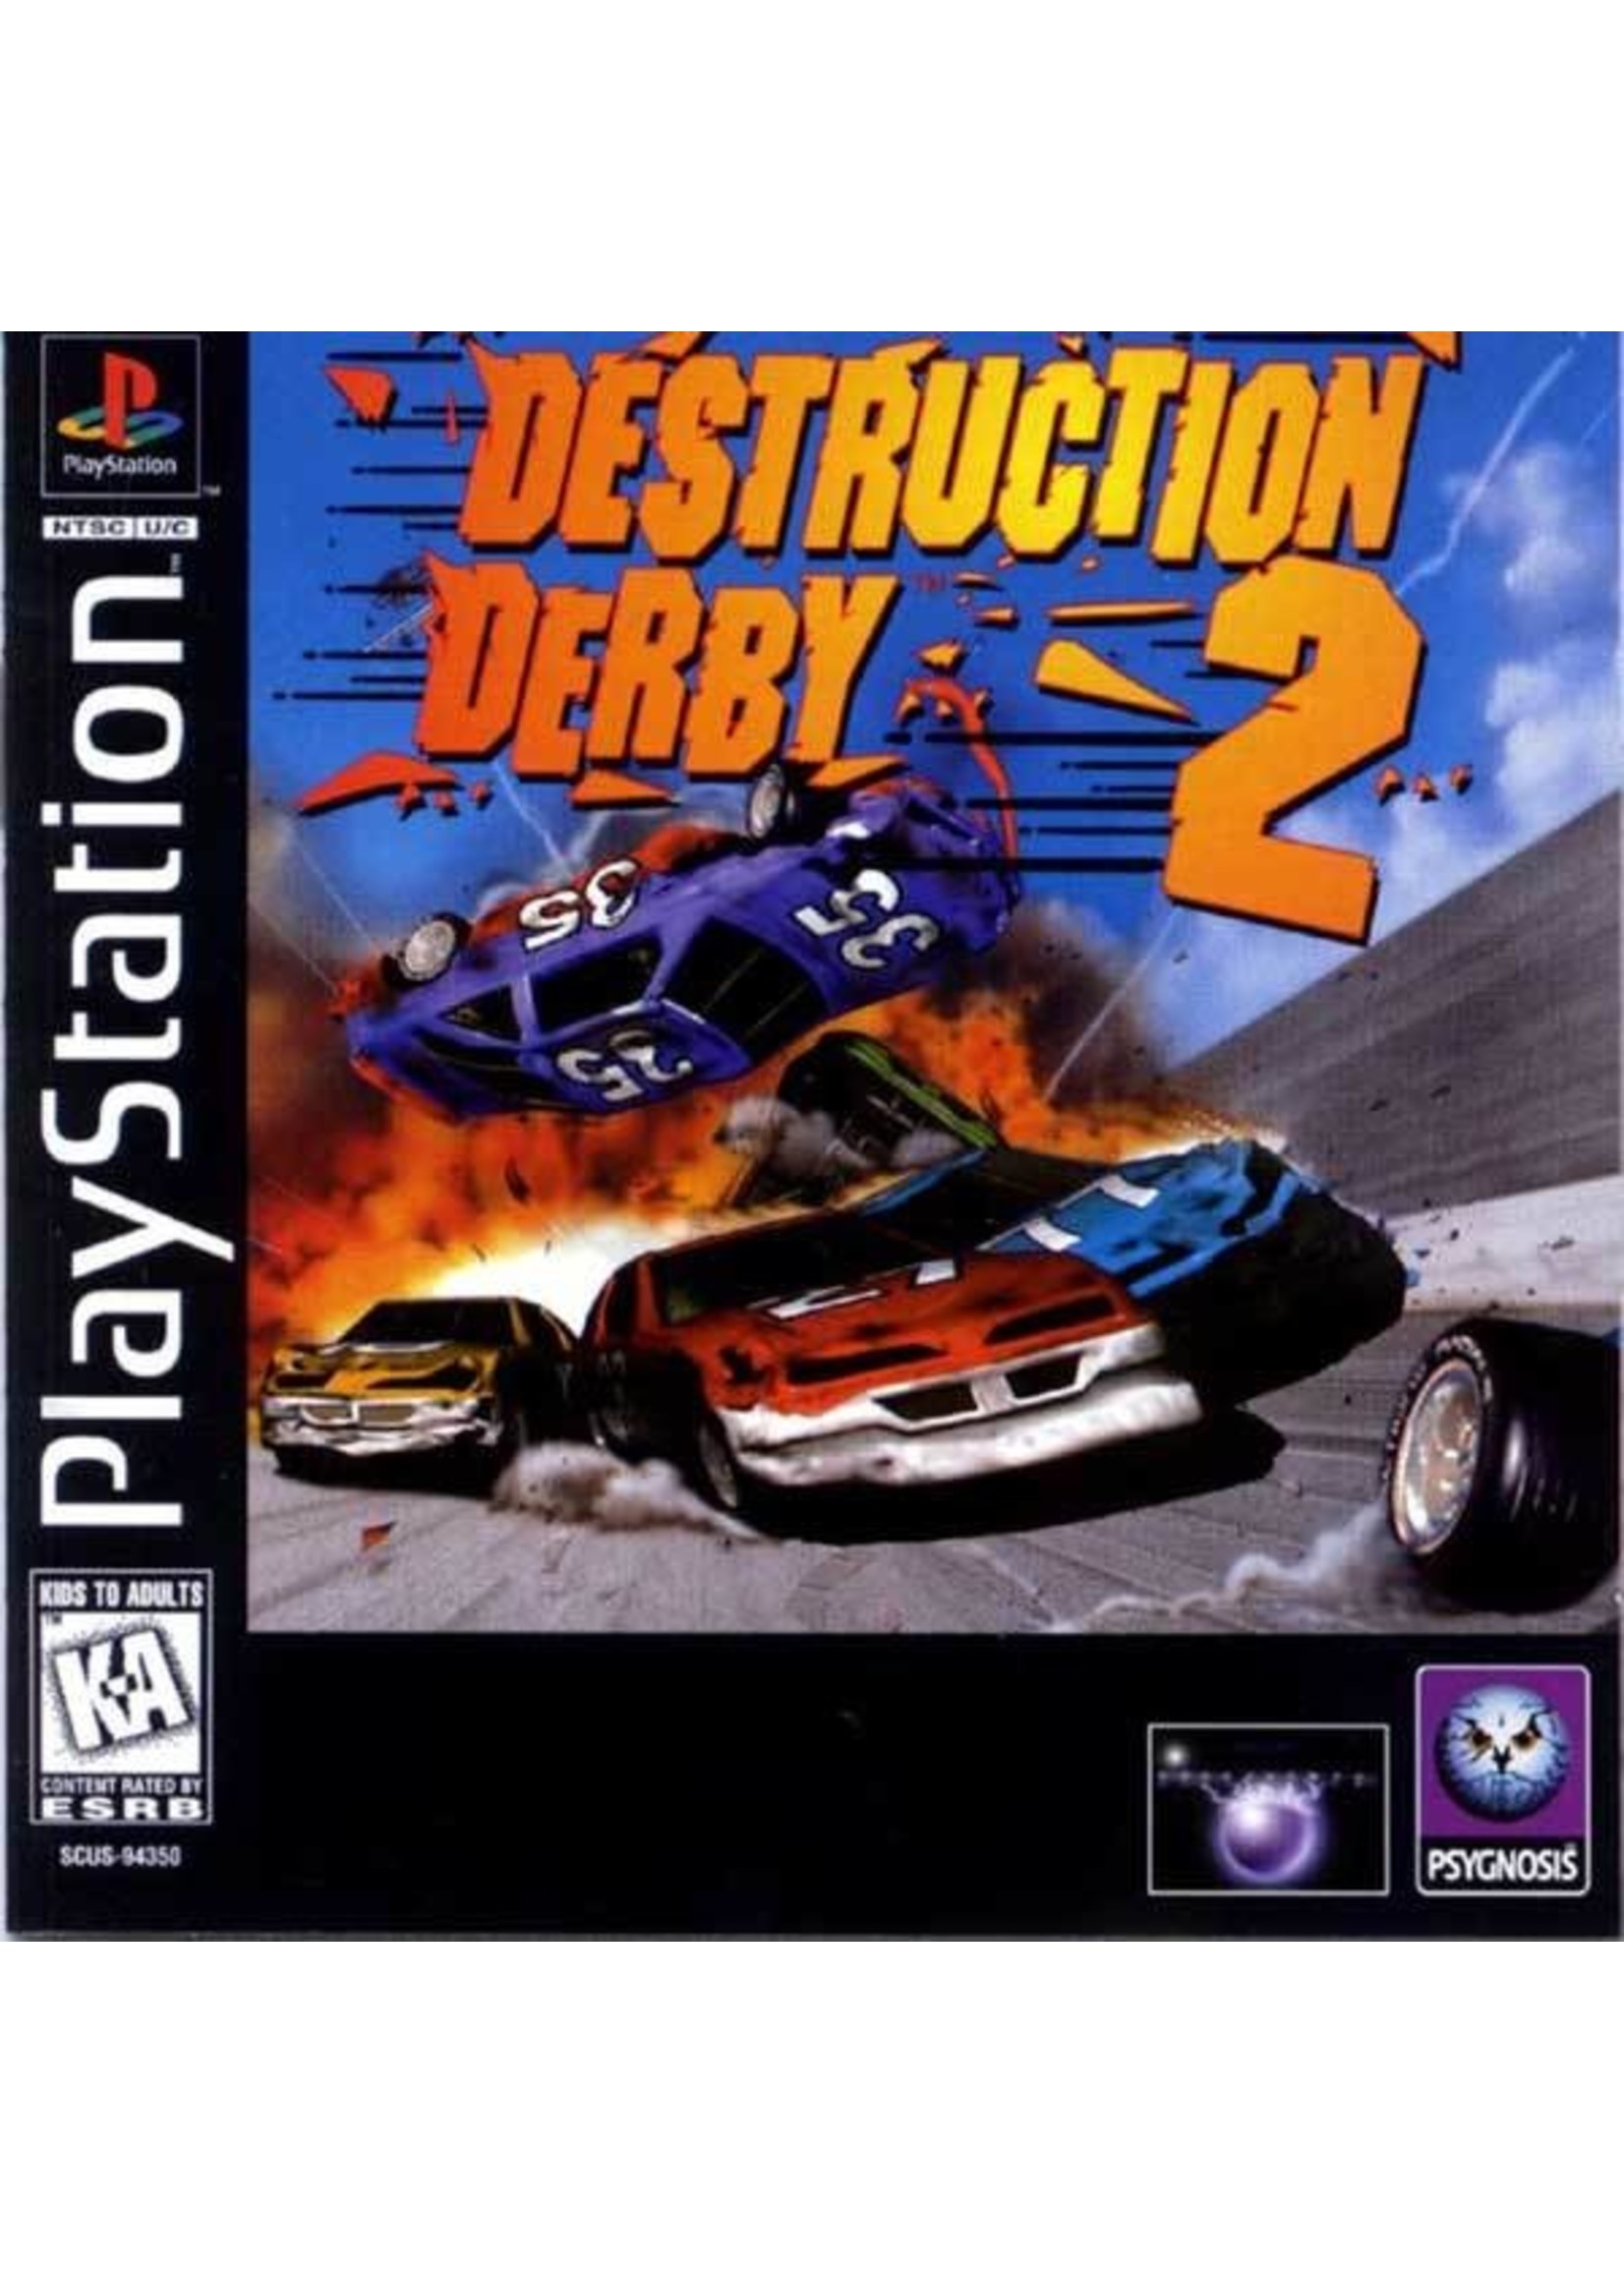 Sony Playstation 1 (PS1) Destruction Derby 2